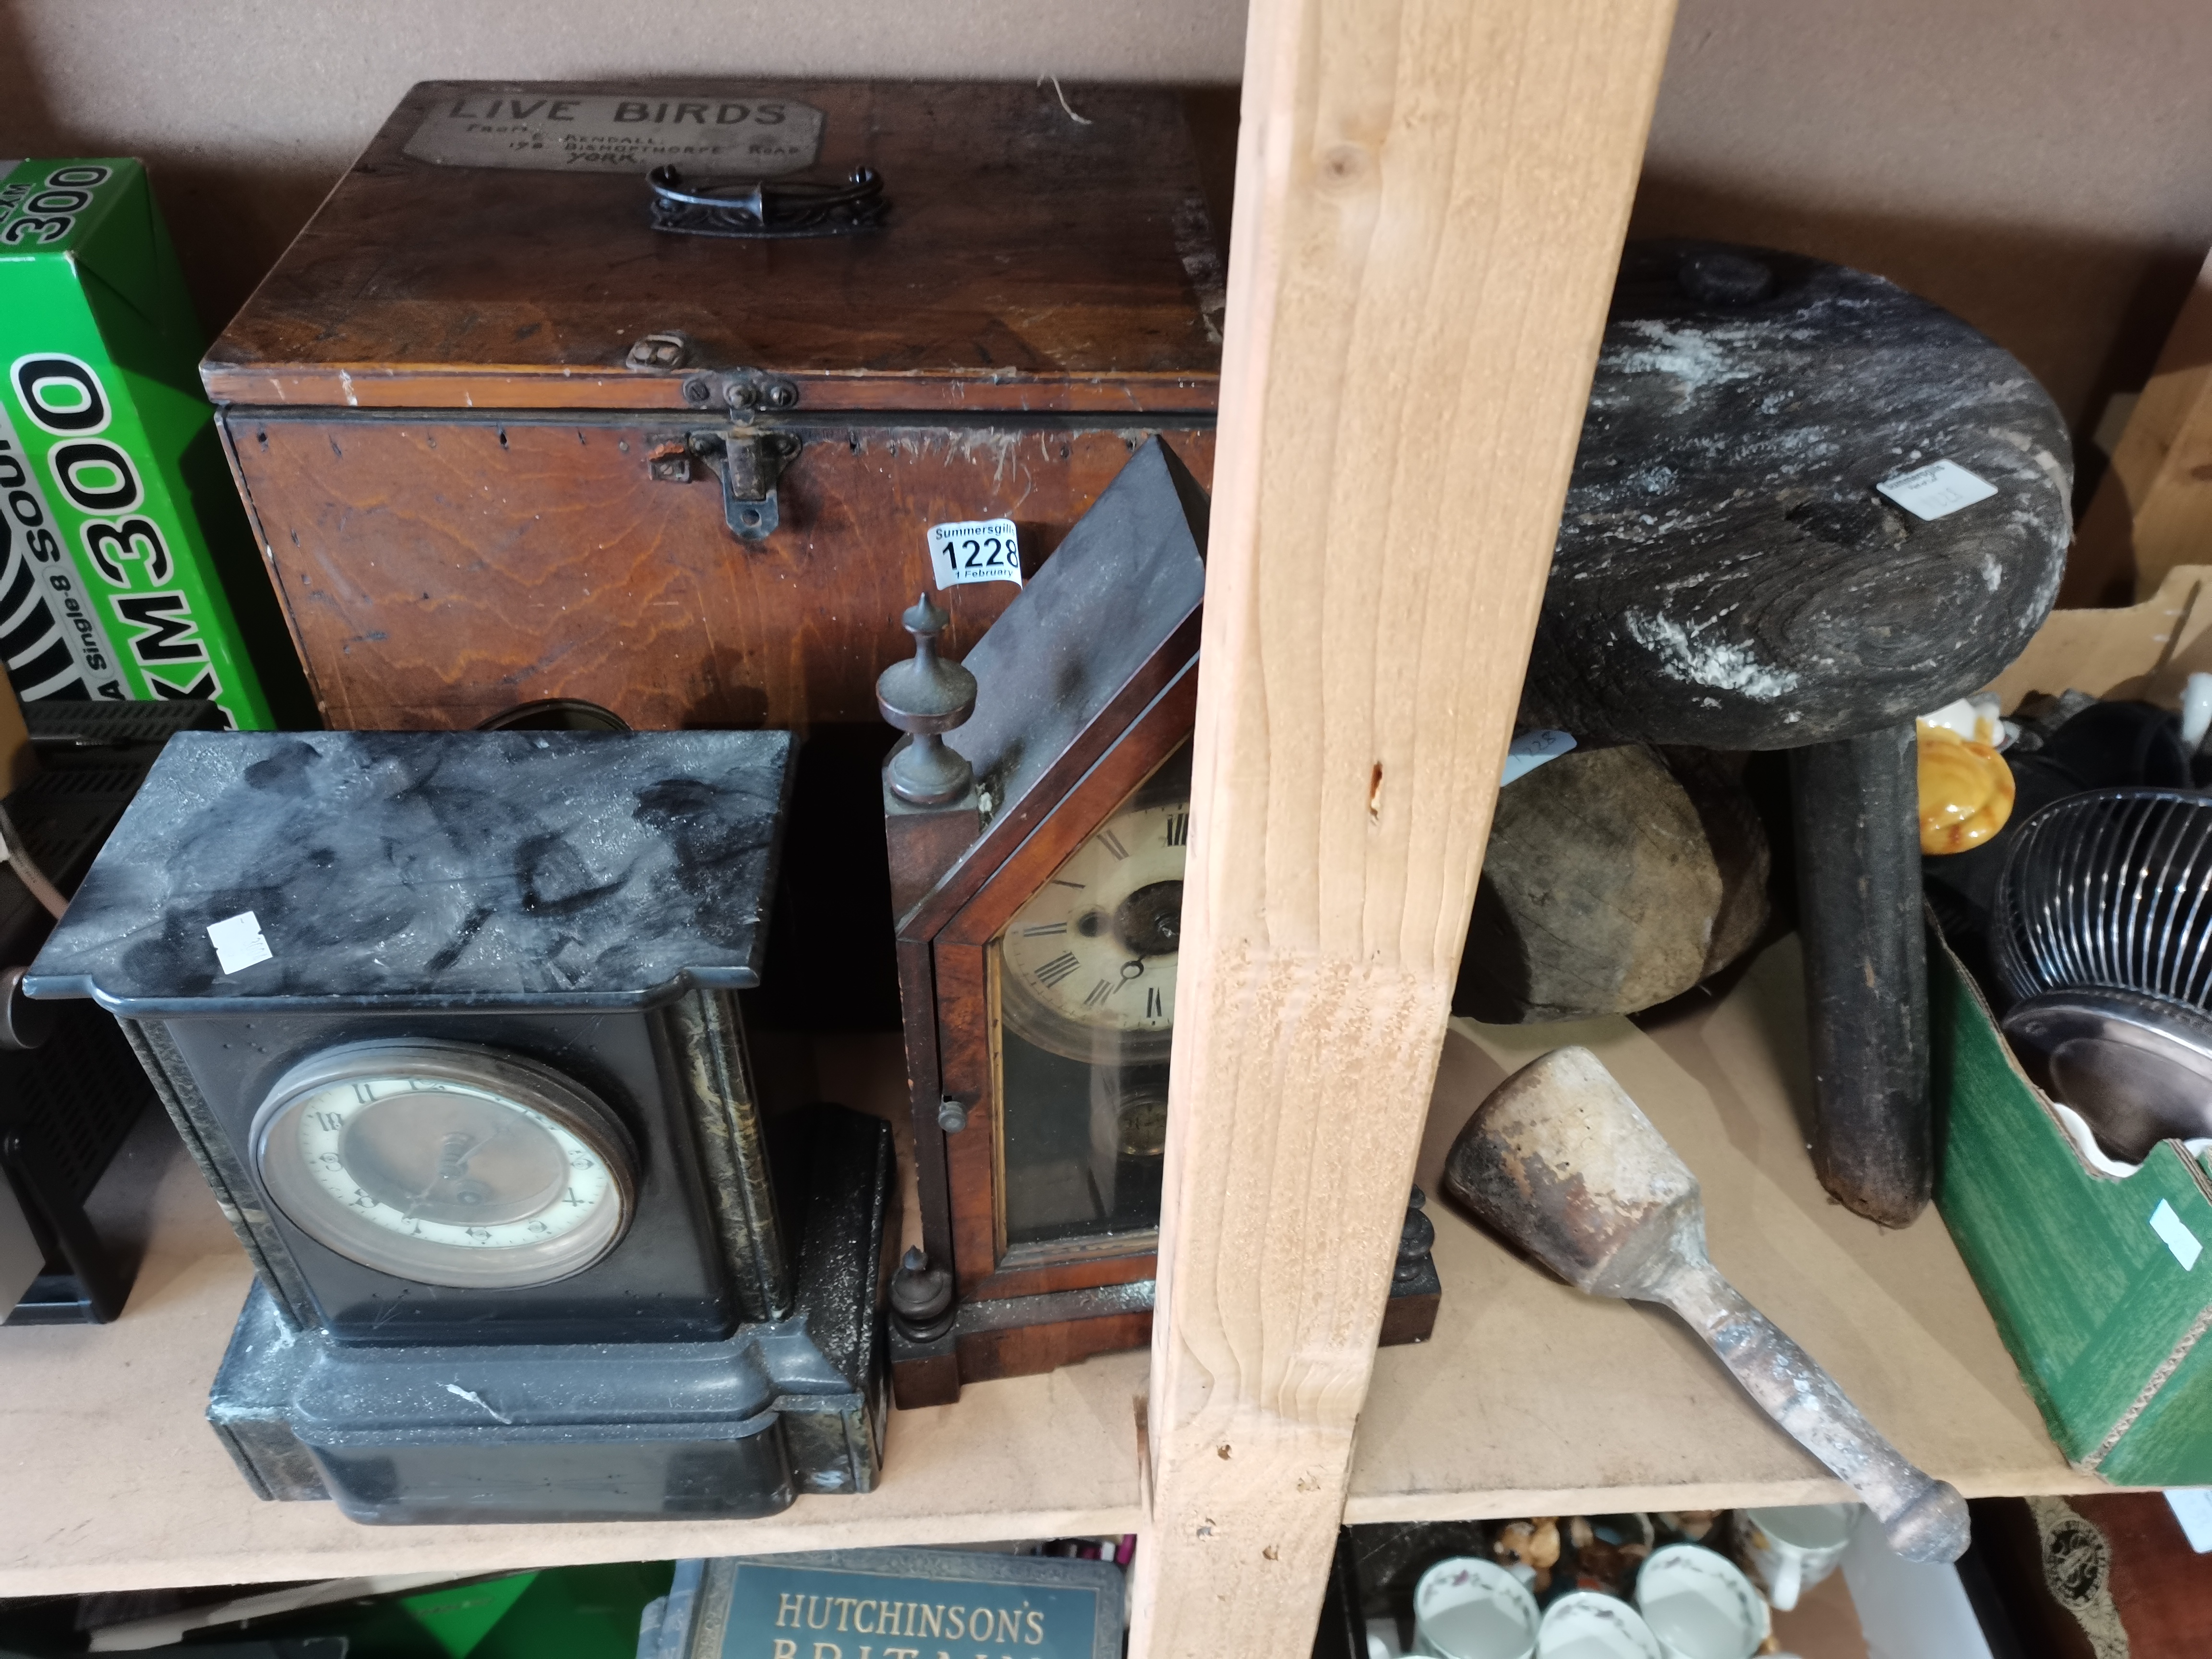 Antique mantle clocks, stool, live birds antique bird carving box etc